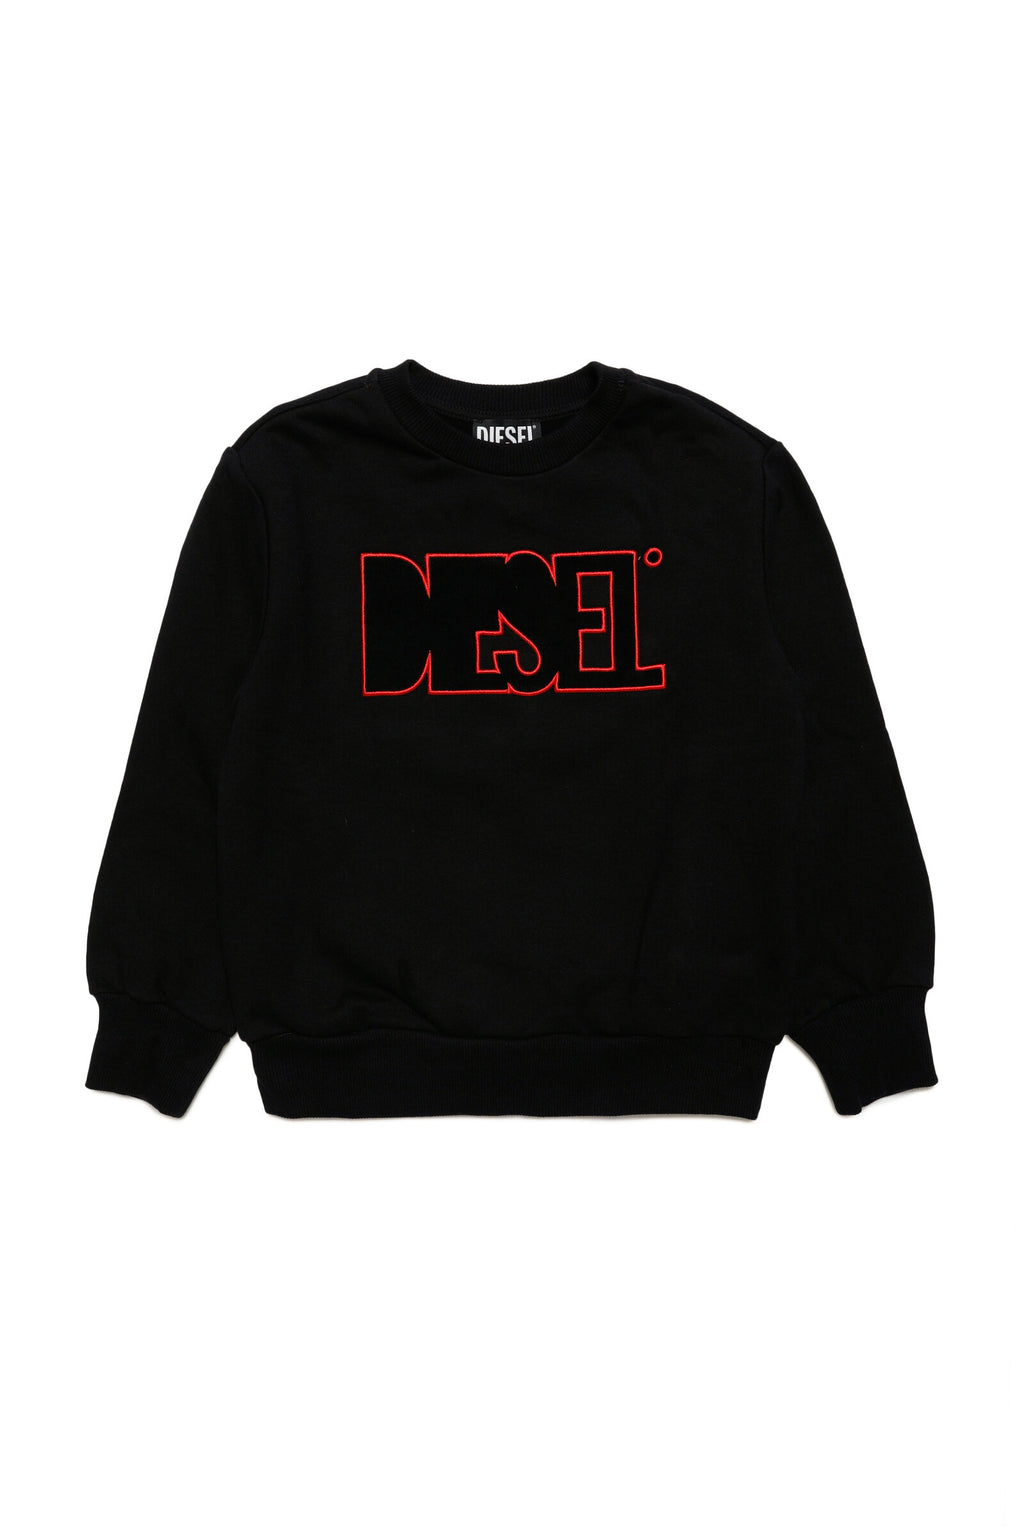 Black sweatshirt with Diesel logo applique